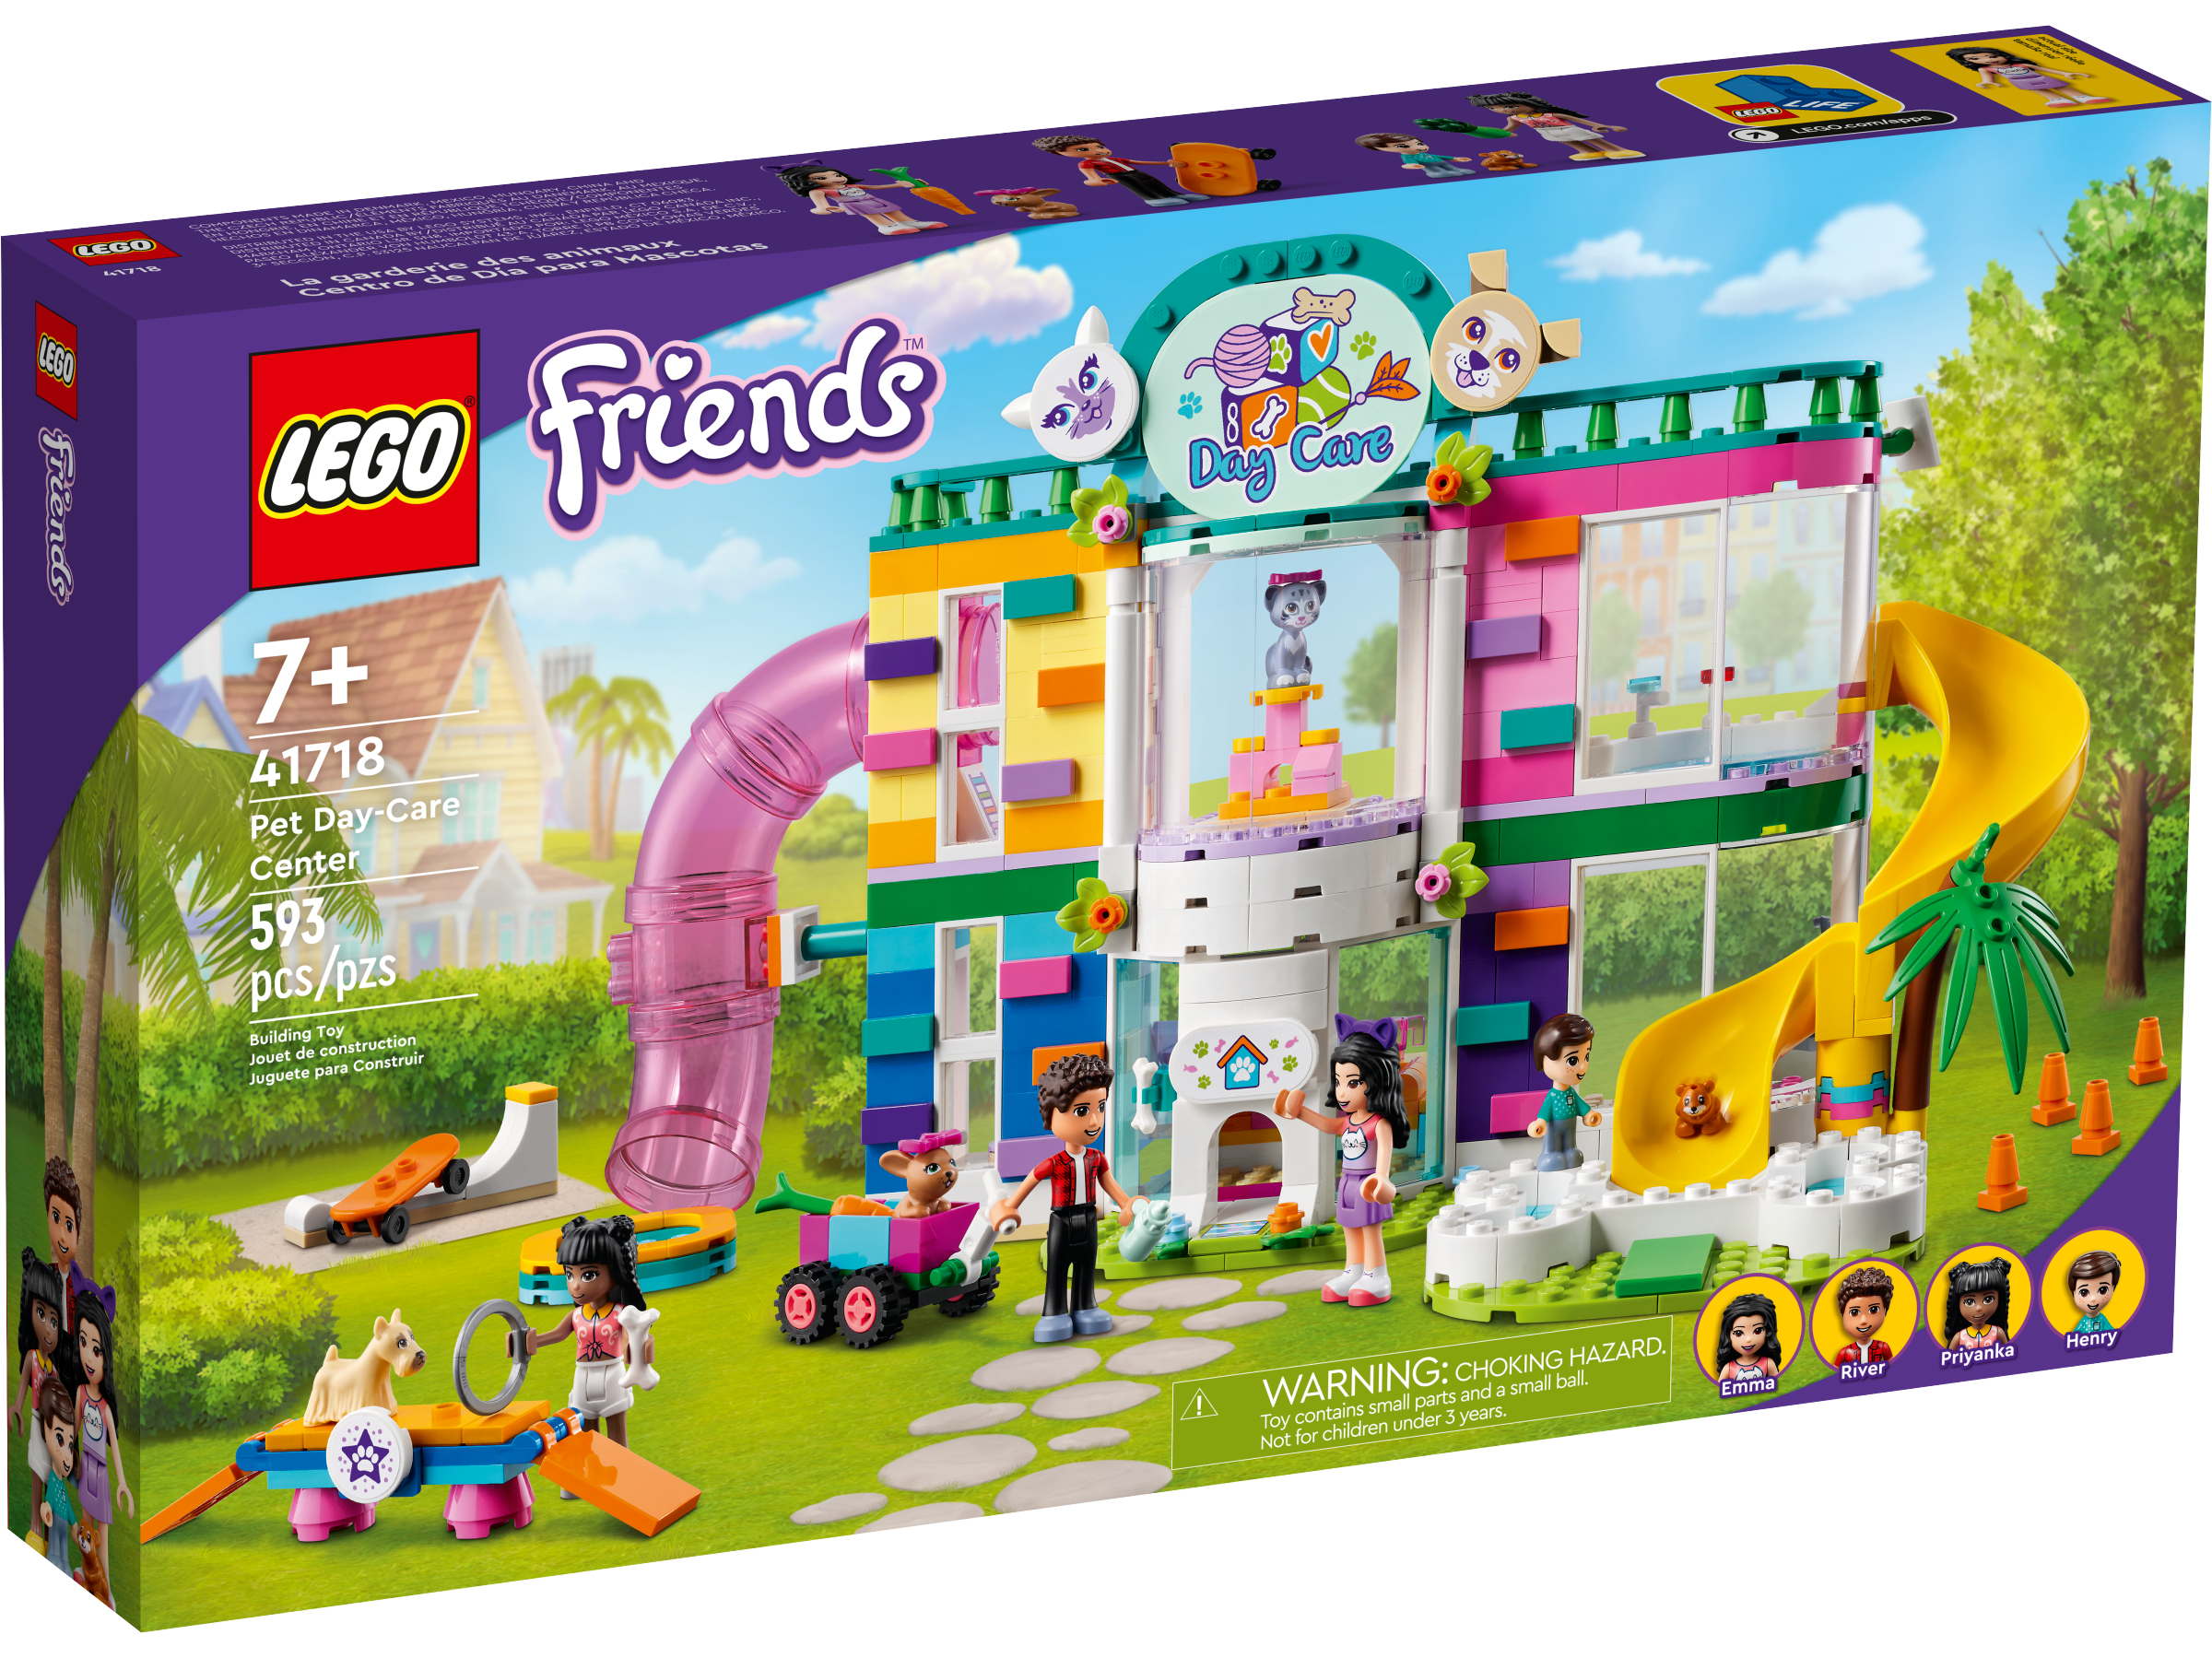 verdrietig Transparant Amuseren LEGO® Friends-speelgoed | Officiële LEGO® winkel NL